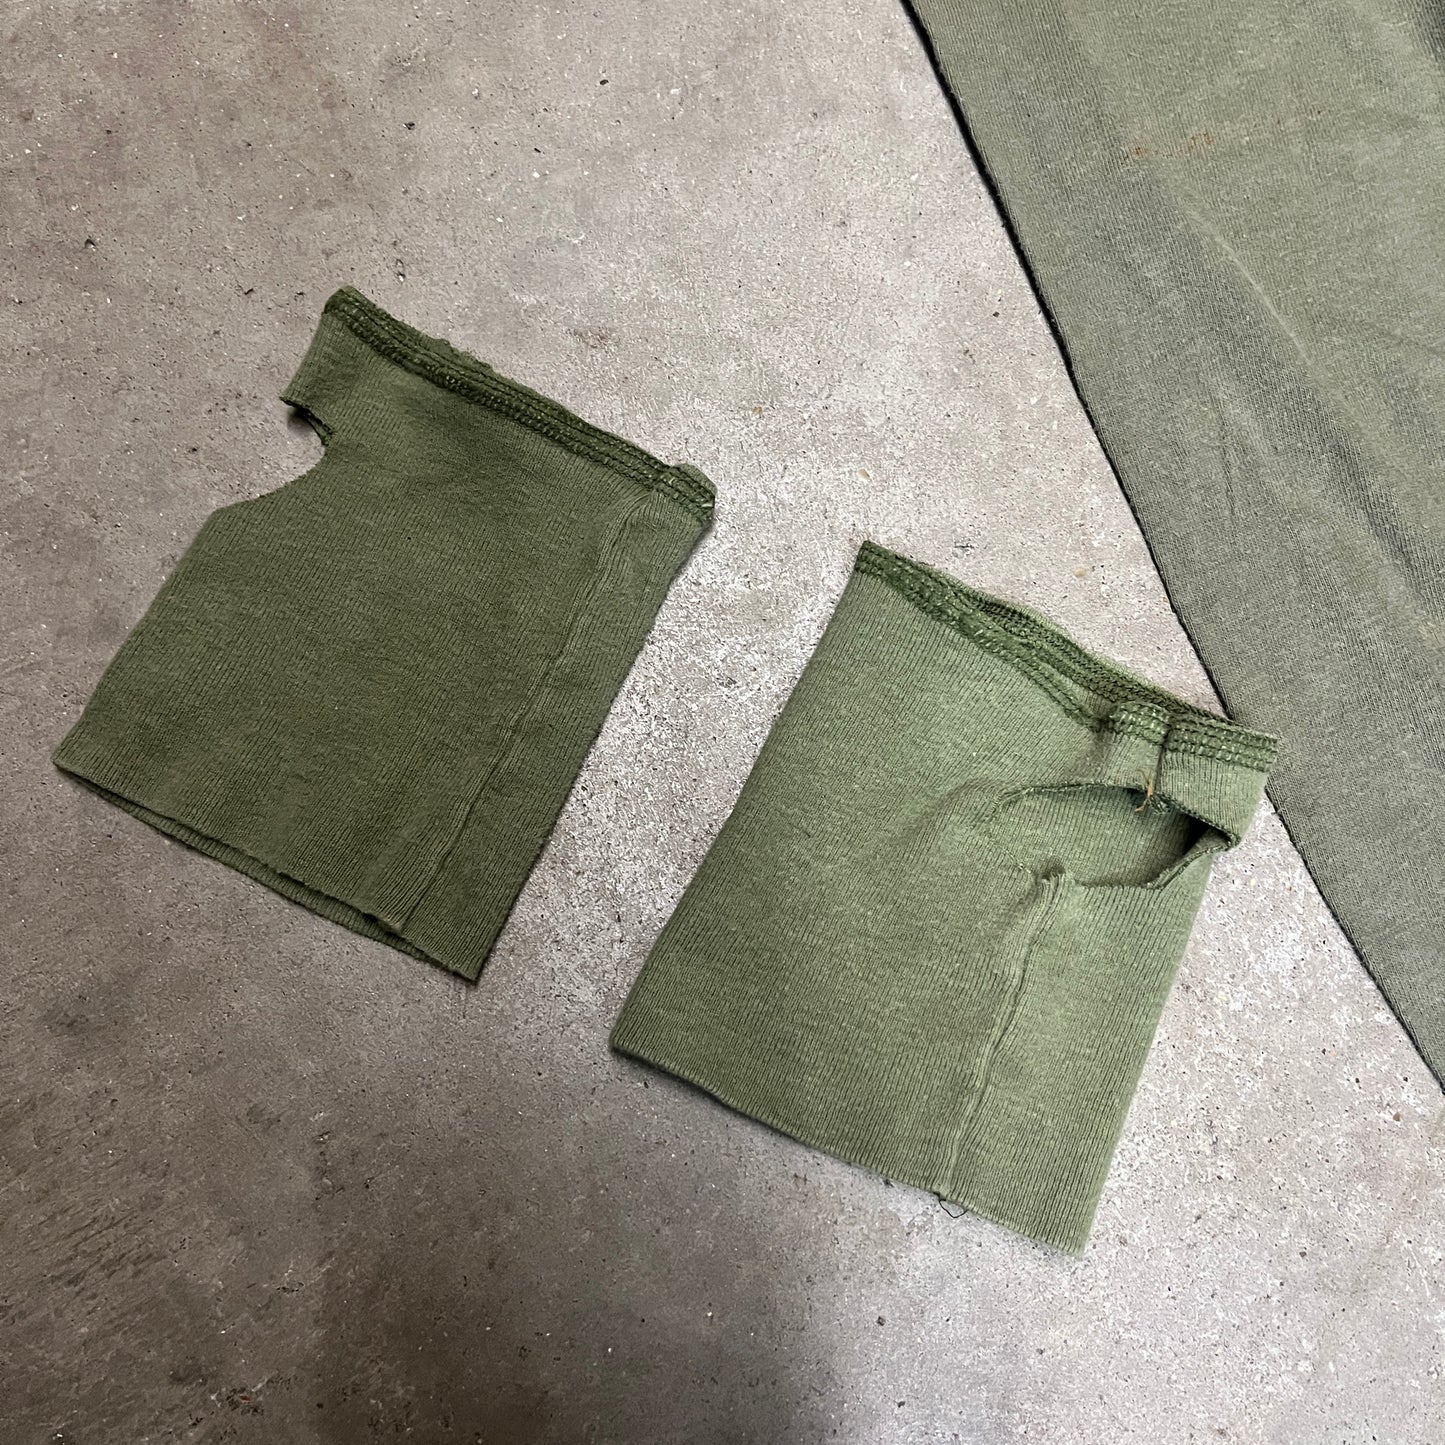 Gloved British Army 1970s Cotton Longsleeve Shirt